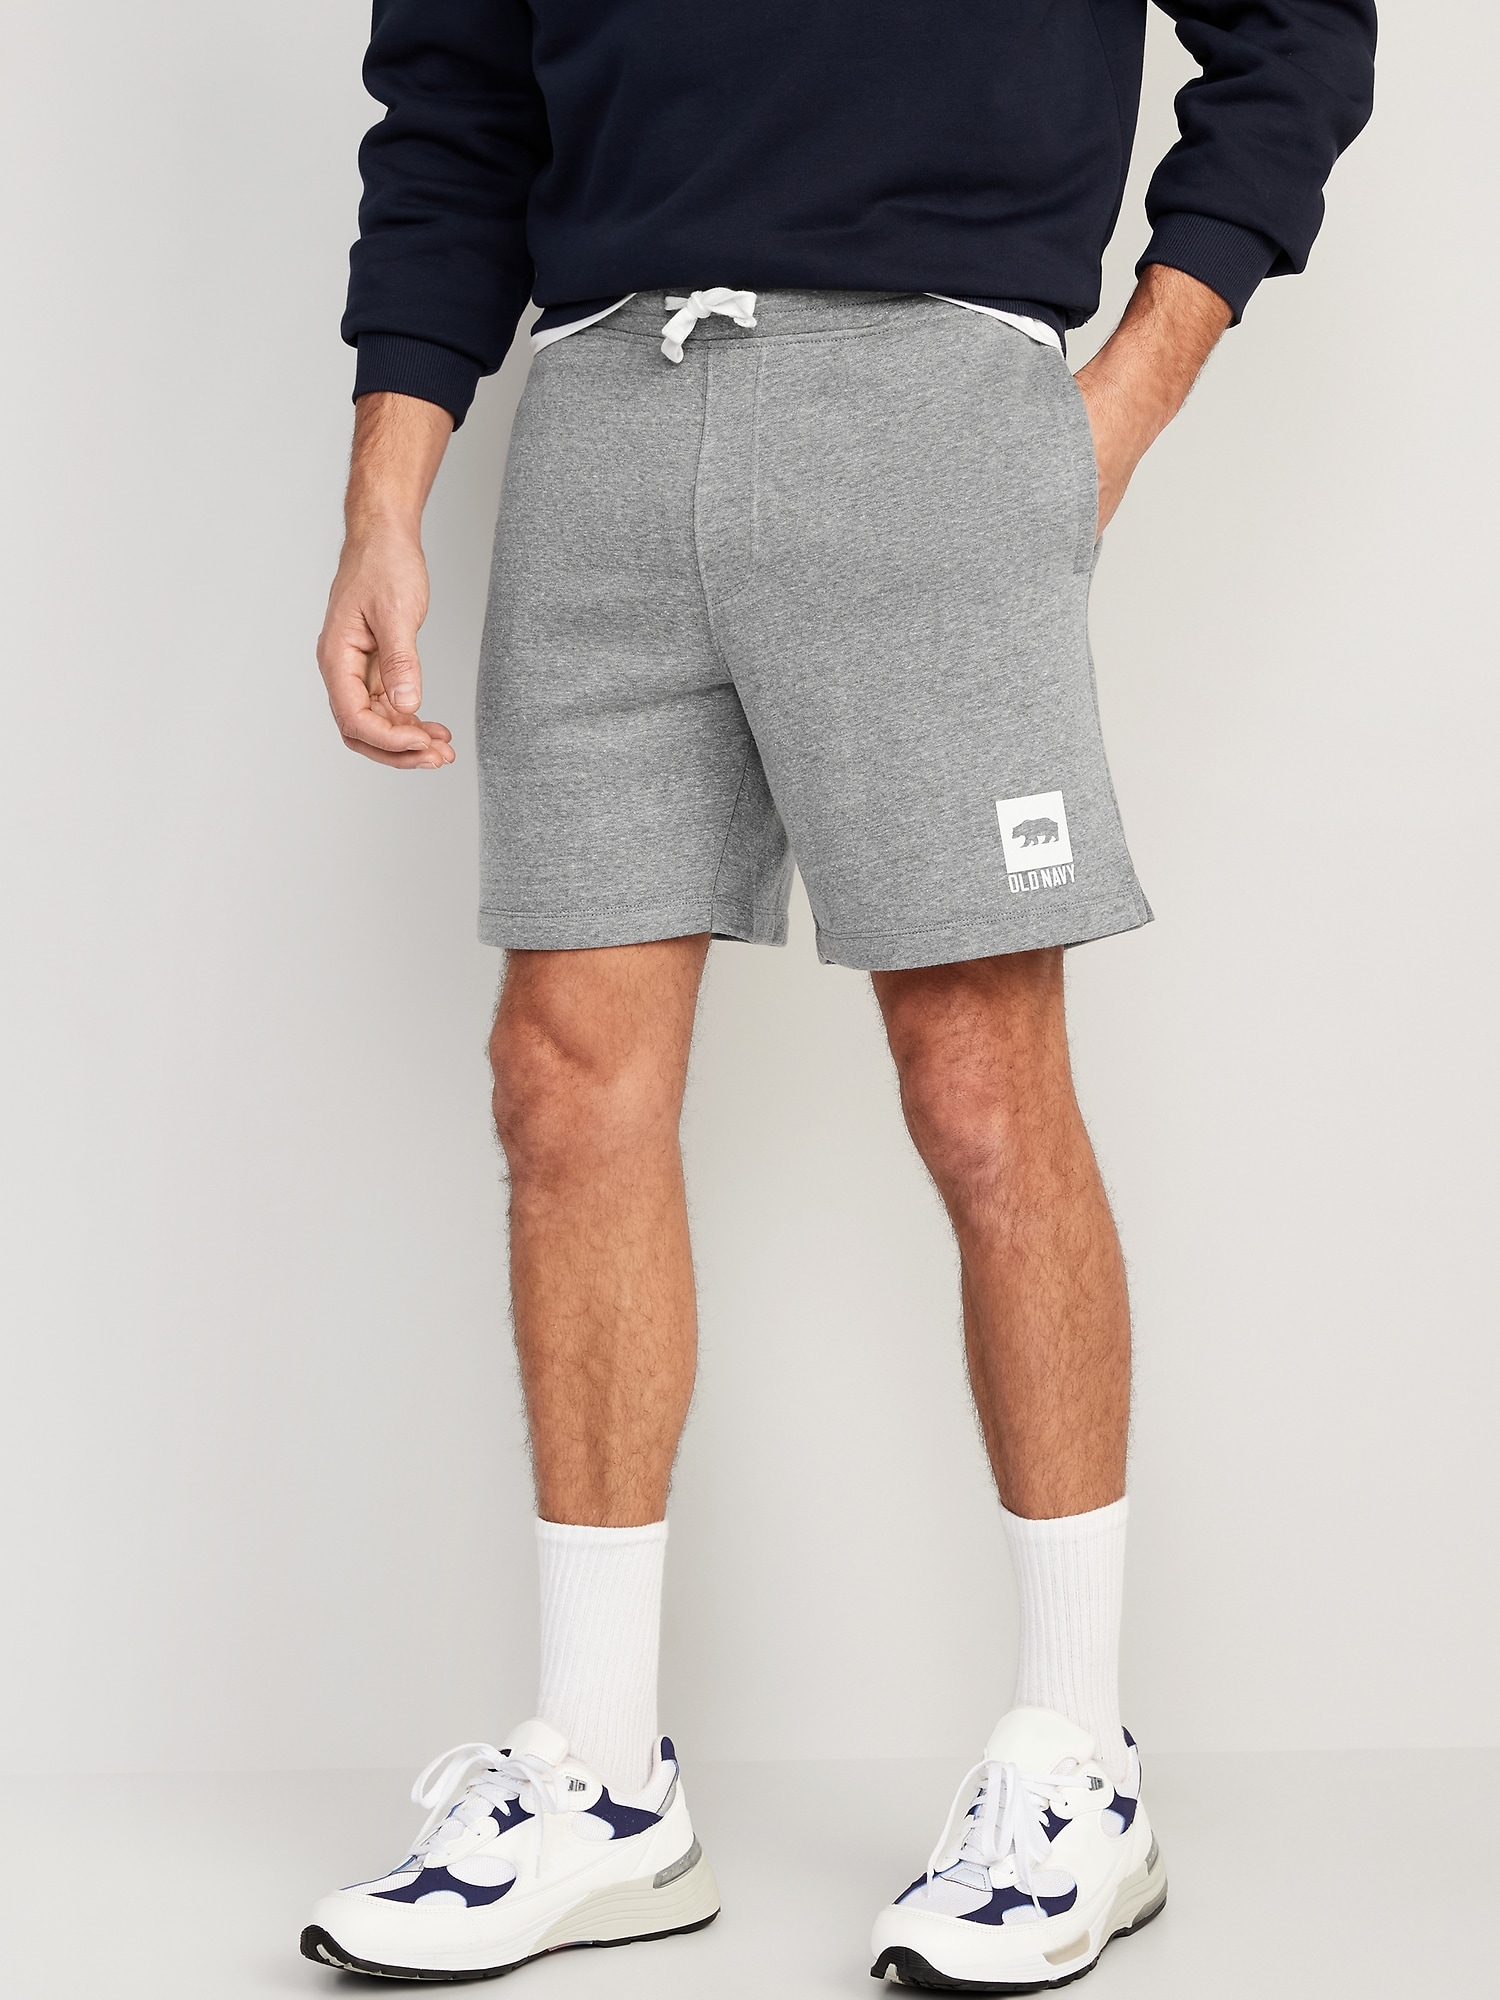 Old Navy Fleece Logo Shorts for Men -- 7-inch inseam gray. 1